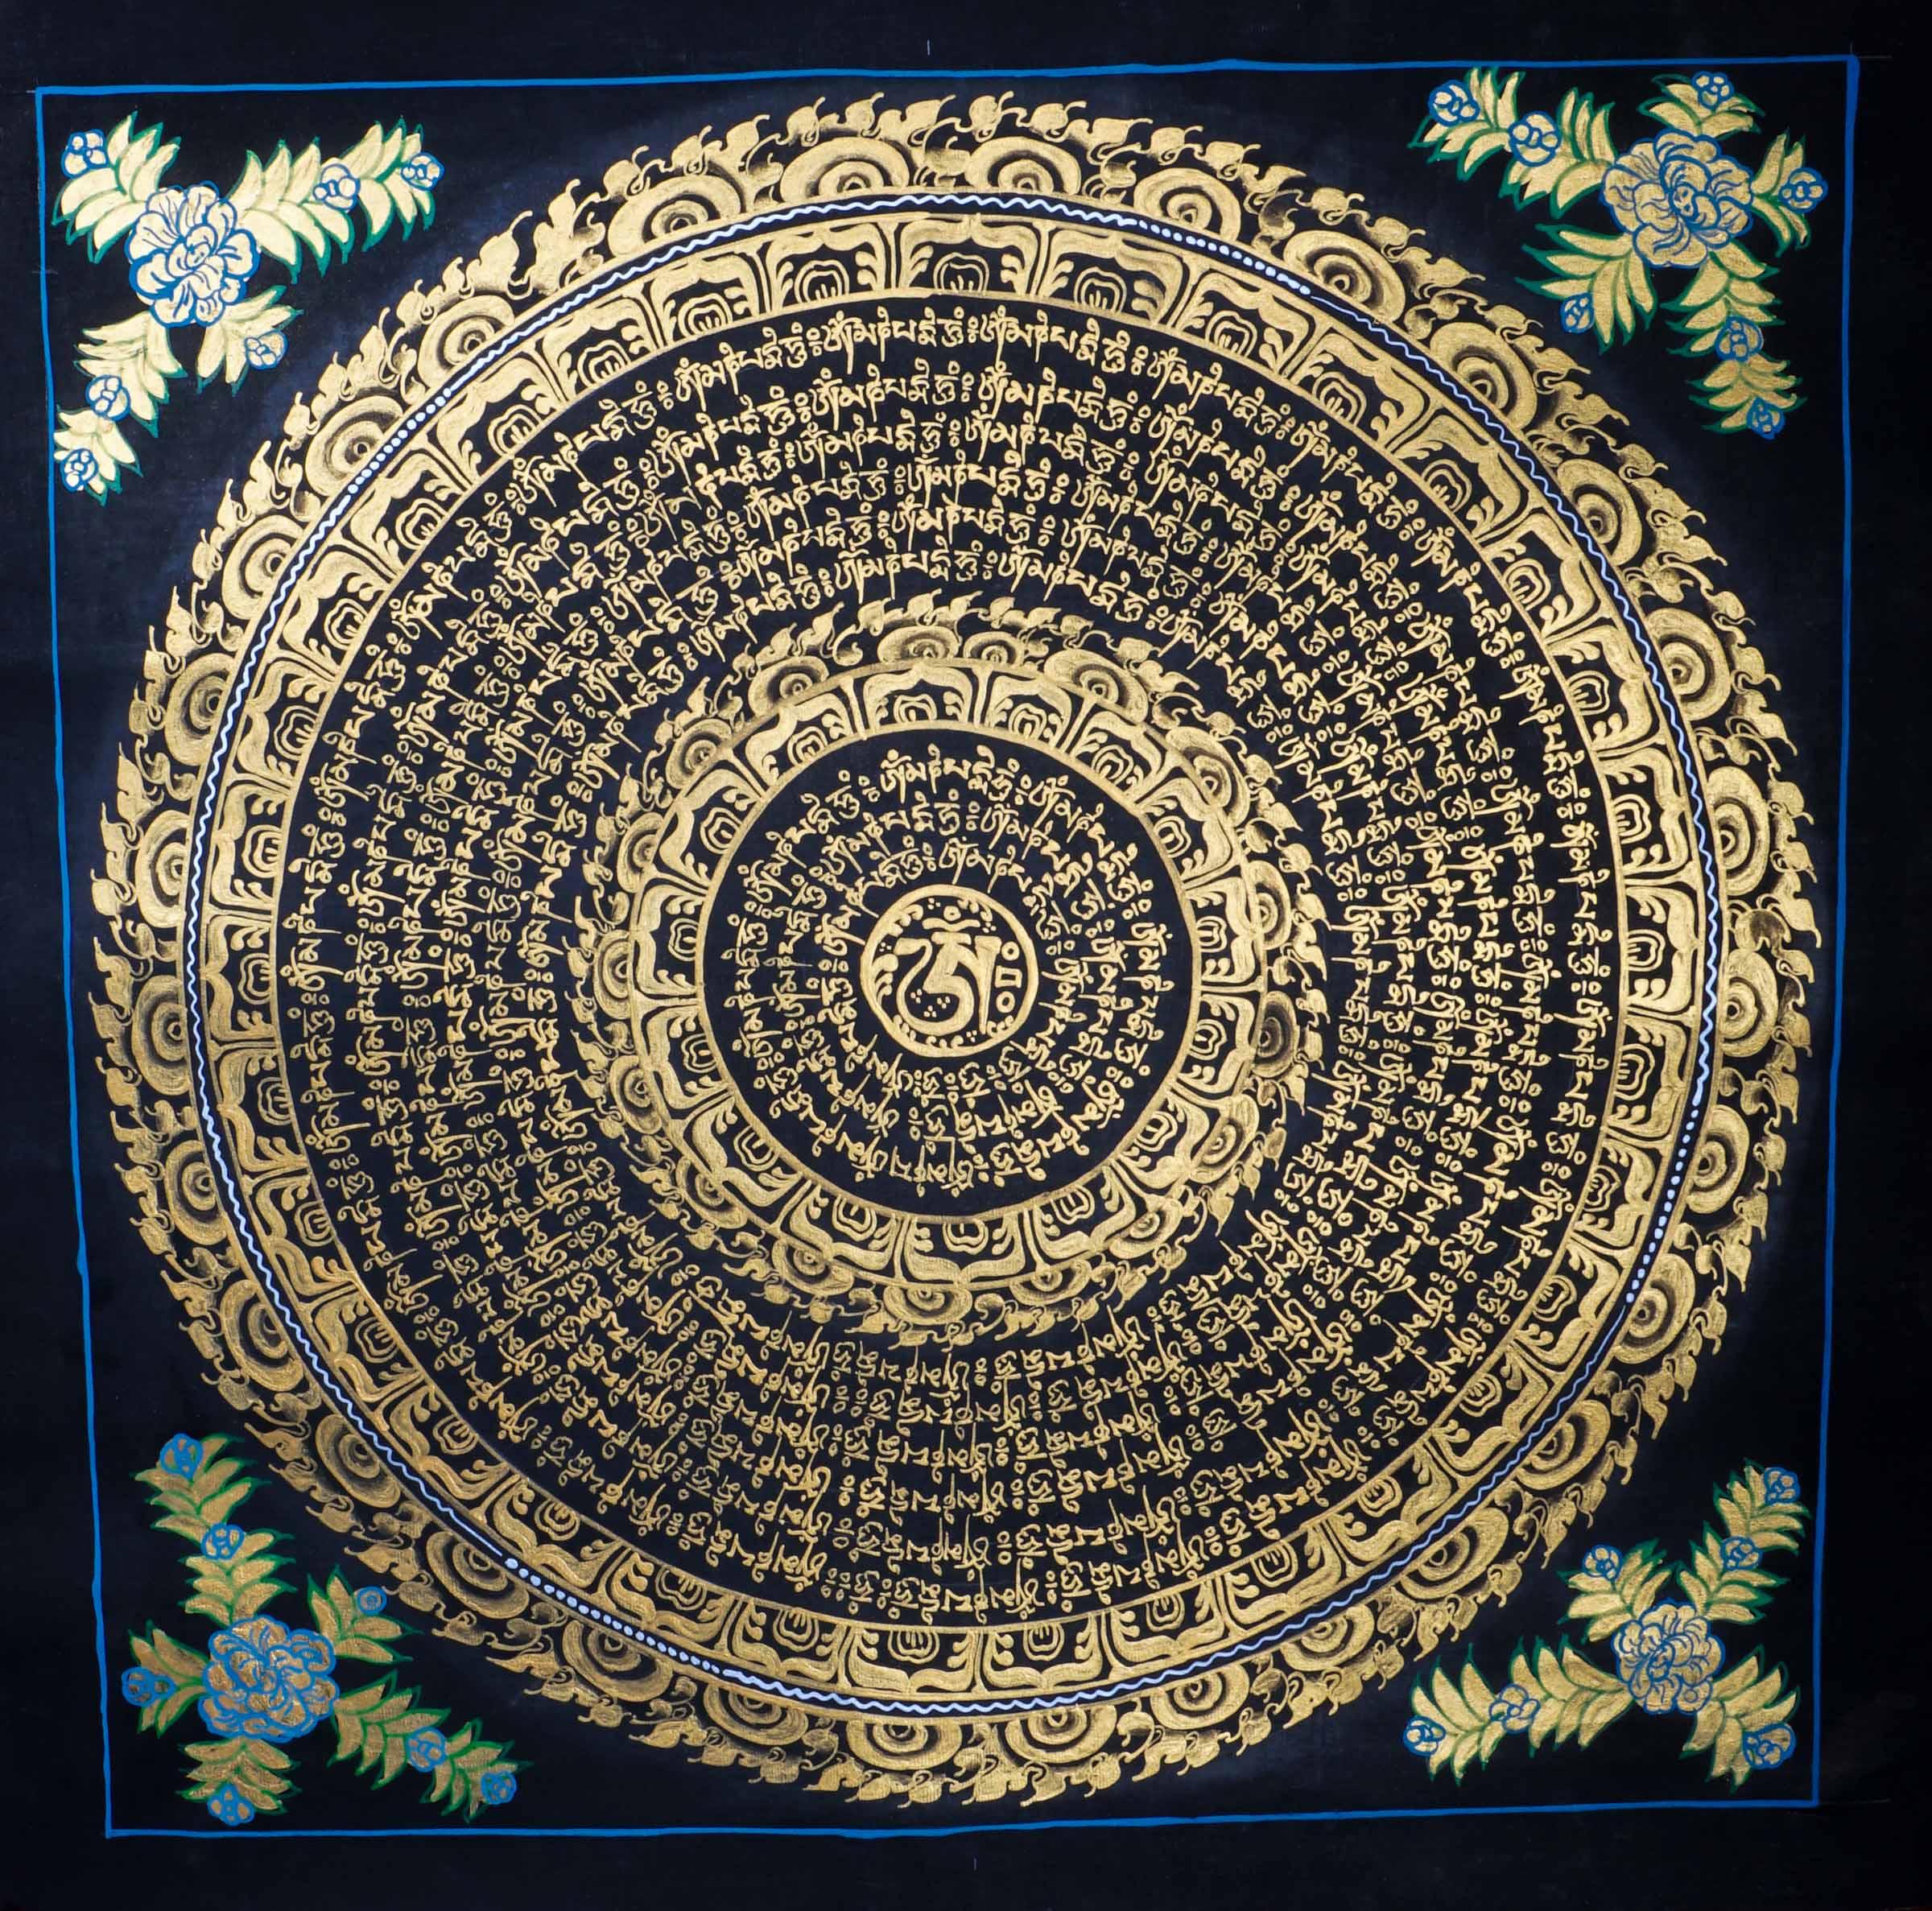  Golden Mantra Mandala for meditation